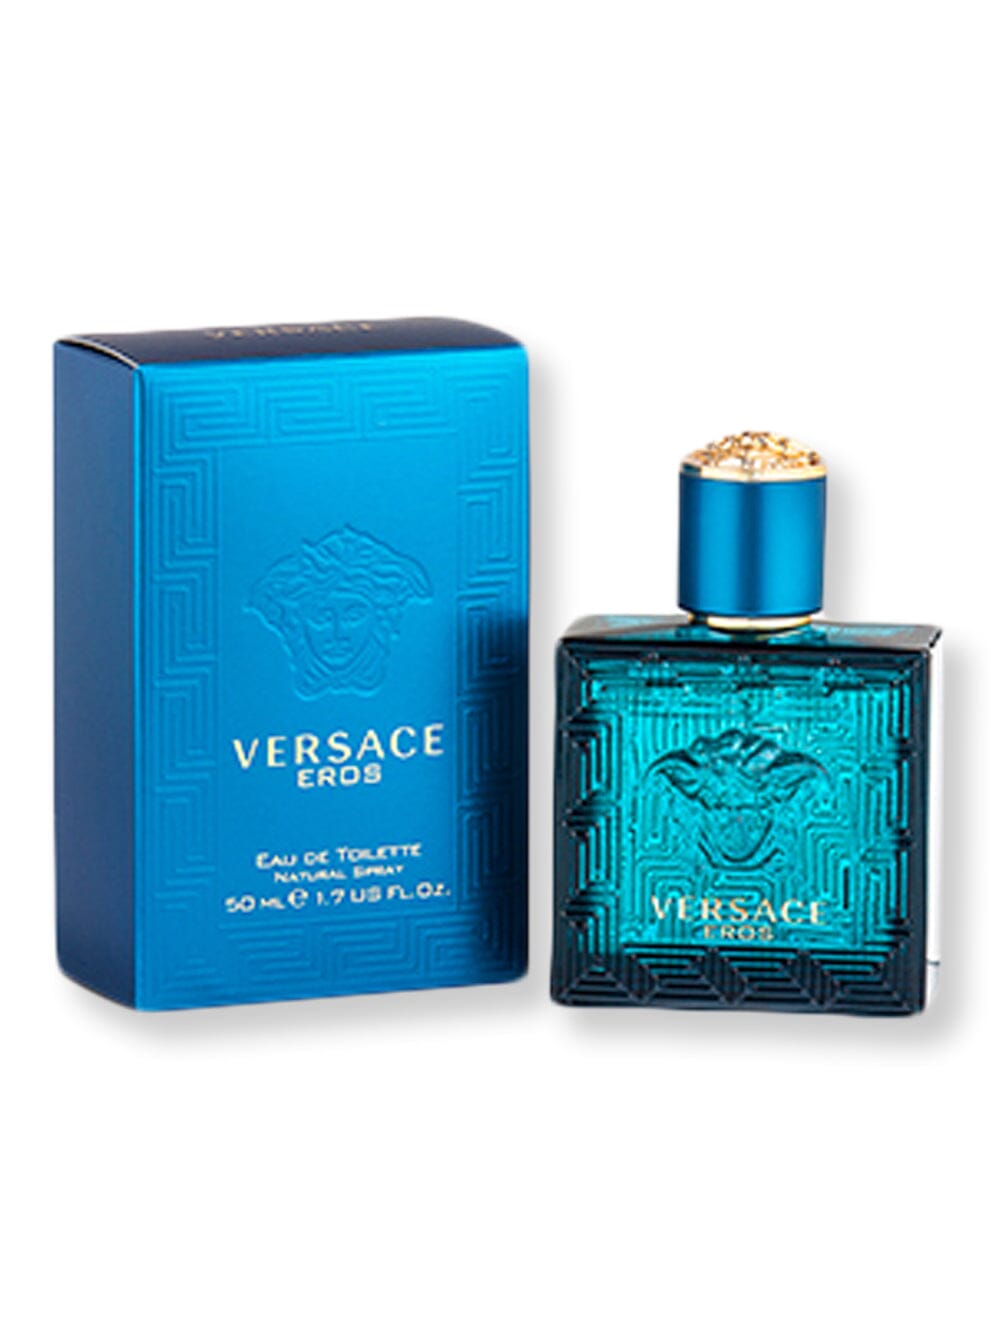 Versace Versace Eros EDT Spray 1.7 oz Perfume 